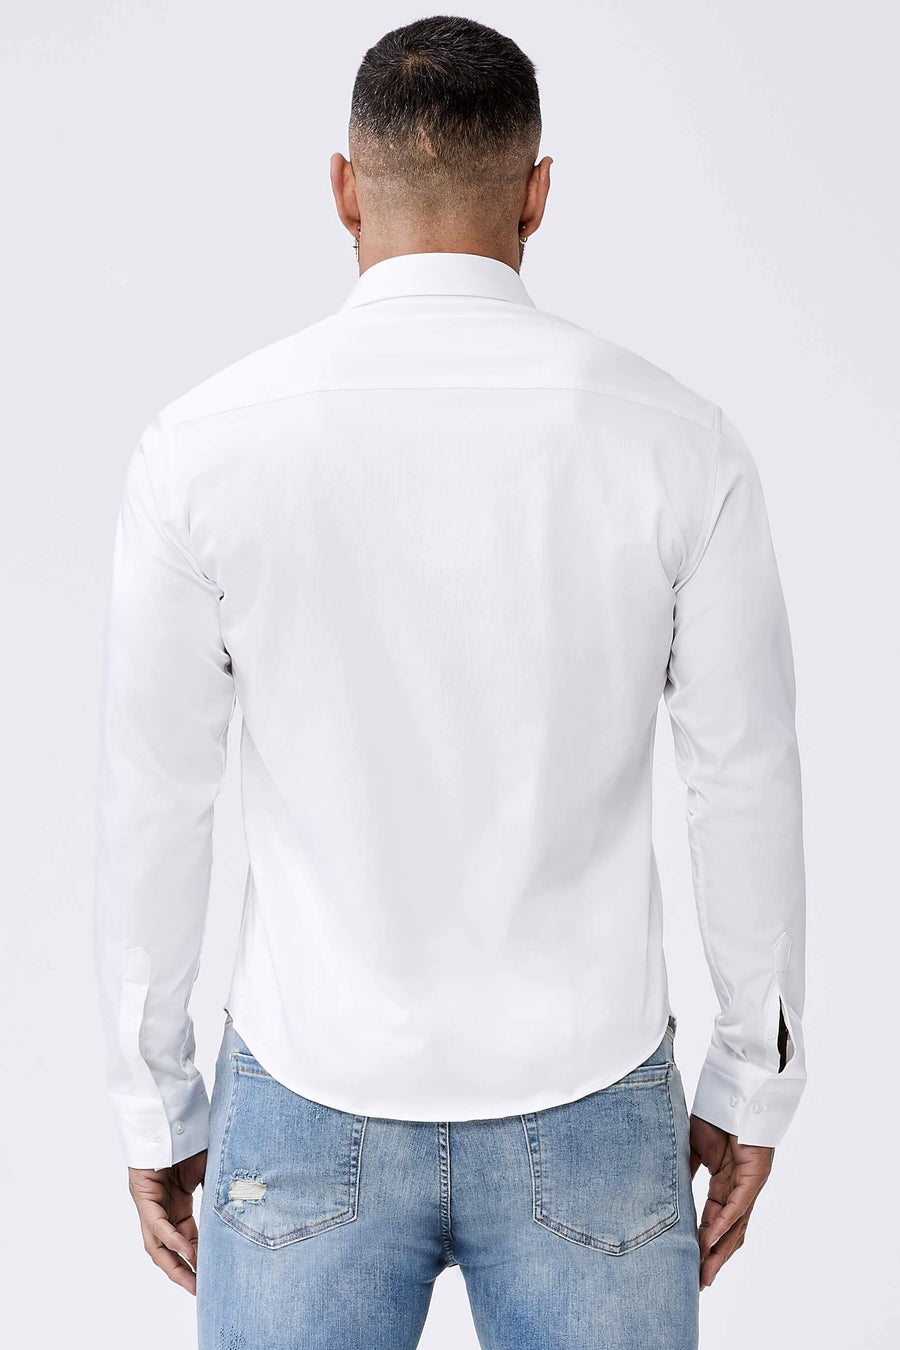 Legend London Shirts Long Sleeve Satin Shirt – White